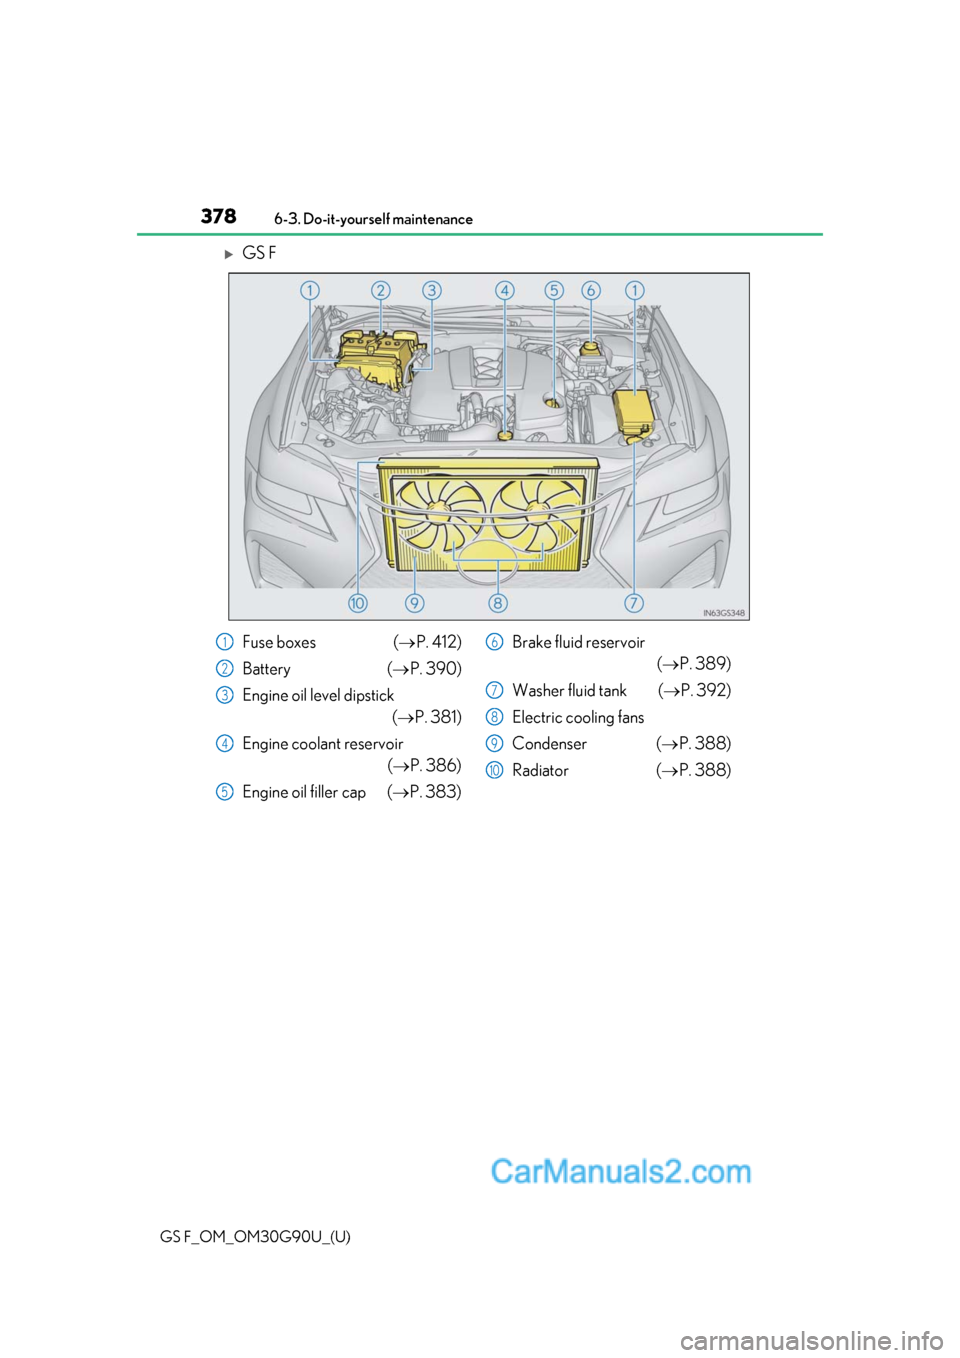 Lexus GS F 2019  Owners Manuals 378
GS F_OM_OM30G90U_(U)6-3. Do-it-yourself maintenance
GS F
Fuse boxes (
P. 412)
Battery ( P. 390)
Engine oil level dipstick (P. 381)
Engine coolant reservoir (P. 386)
Engine oil fille